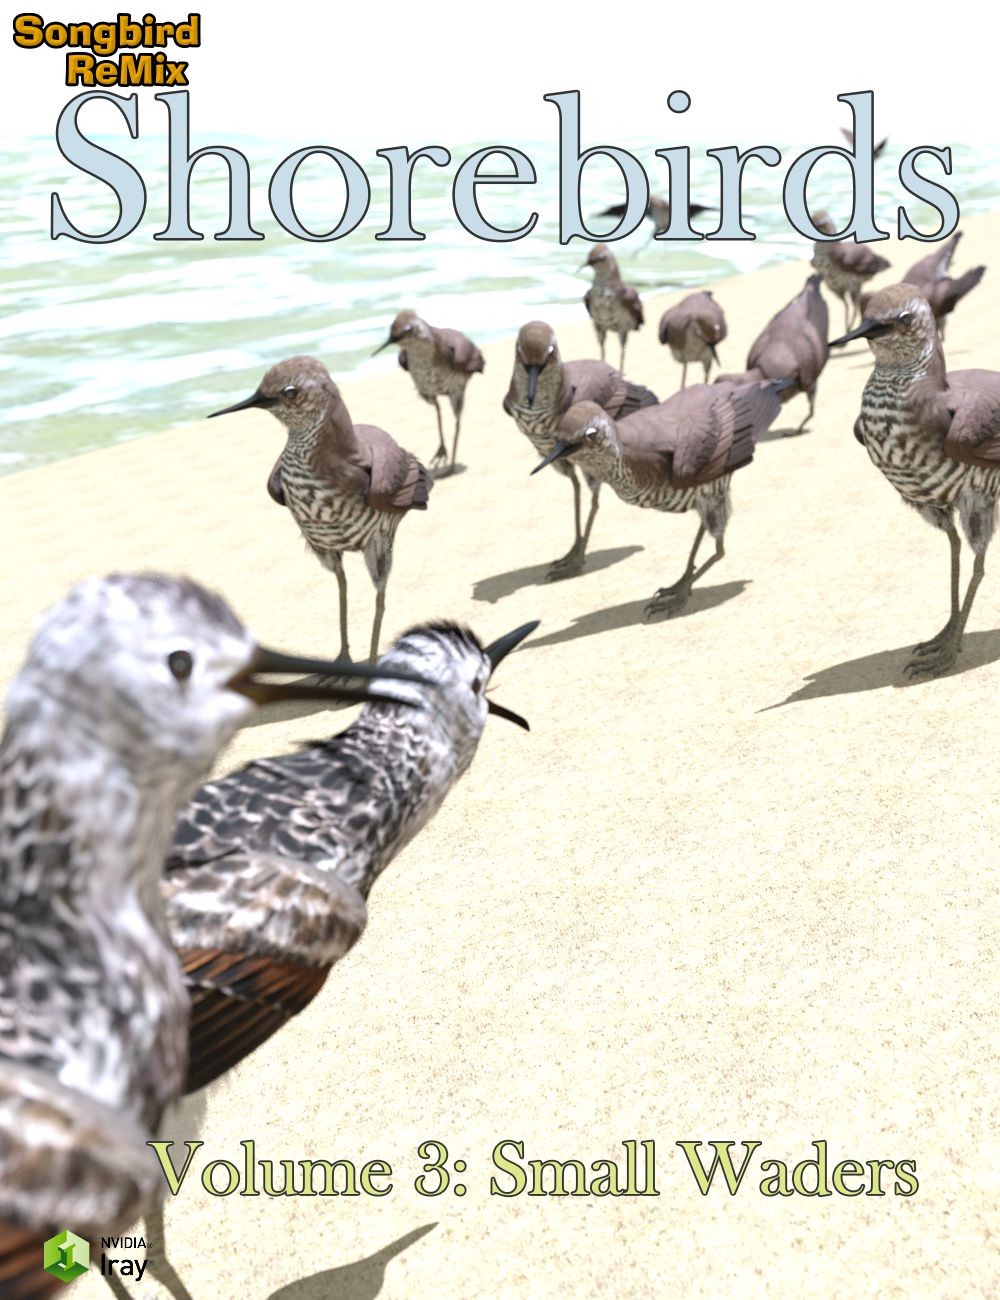 10086-sbrm-shorebirds-vol-3-small-waders-main.jpg